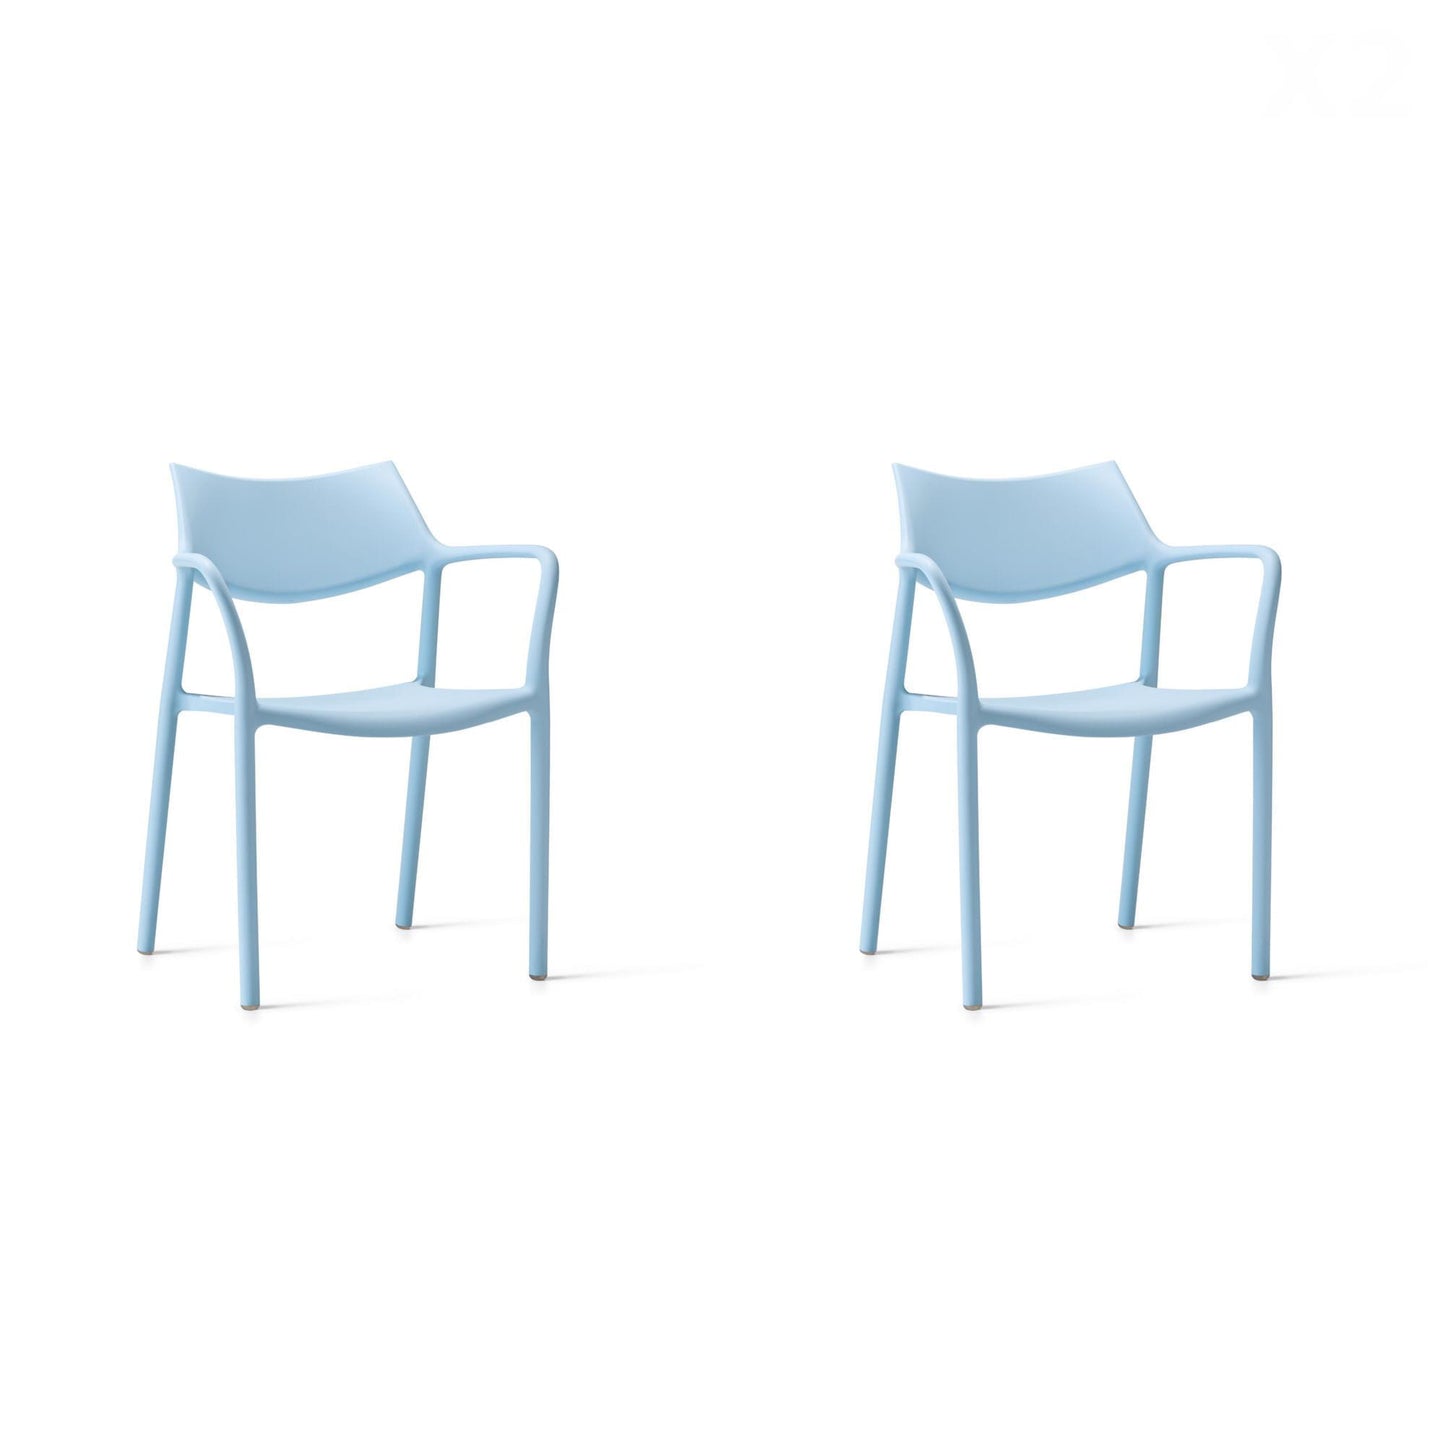 Resol splash aire set 2 silla con brazos interior, exterior azul cielo